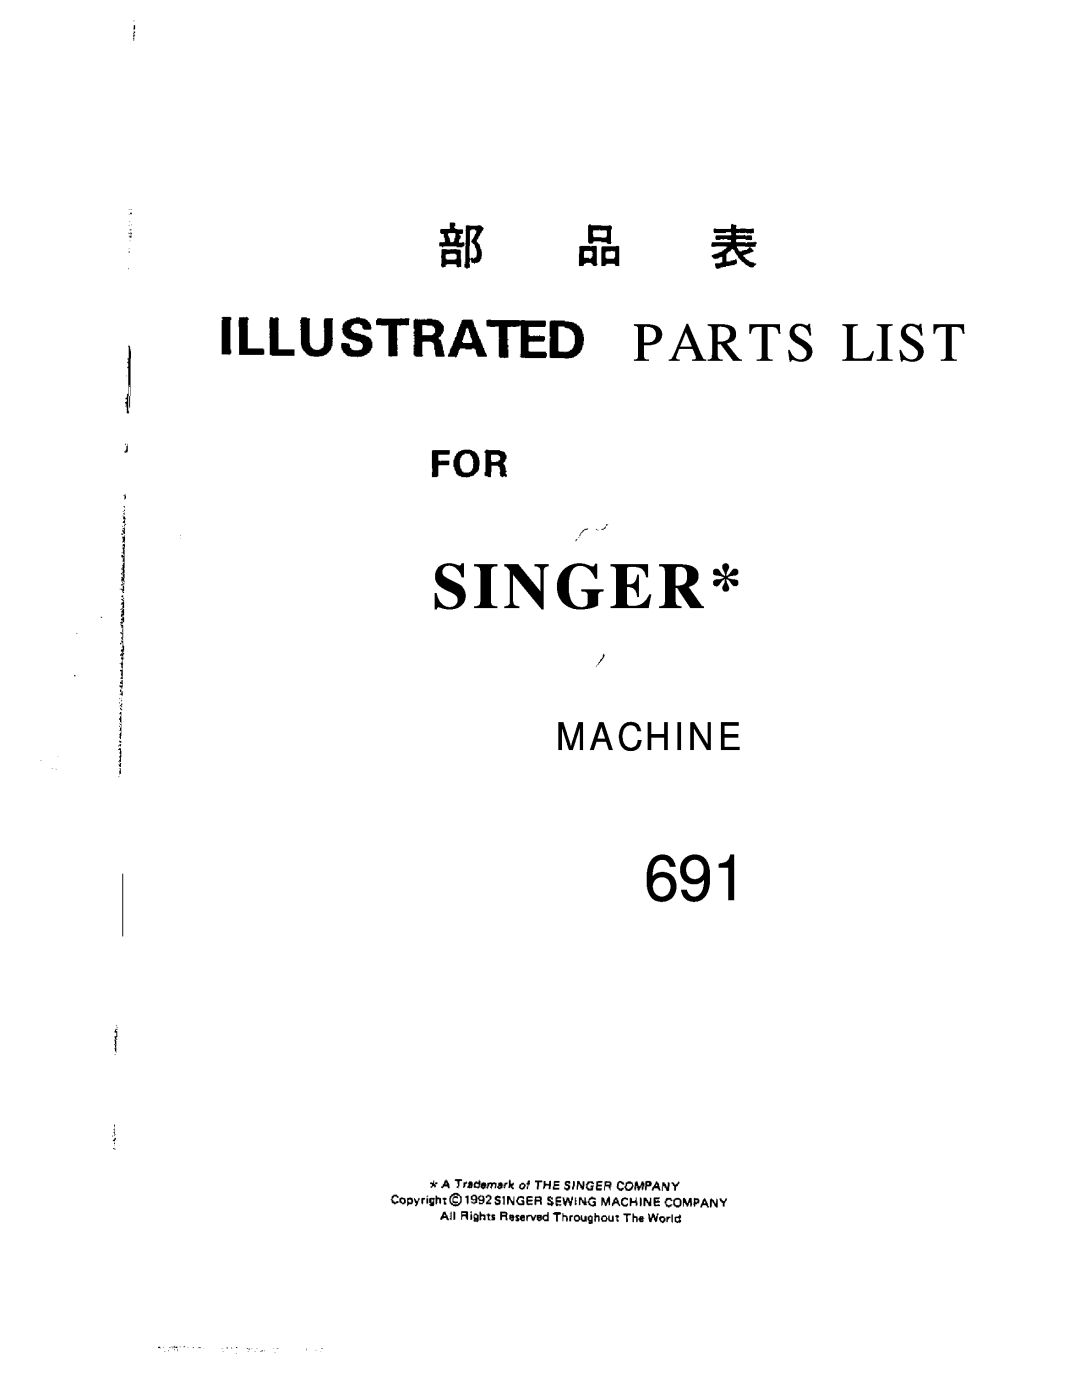 Singer 691 manual Singer, I Illustraed Parts List, Machine 